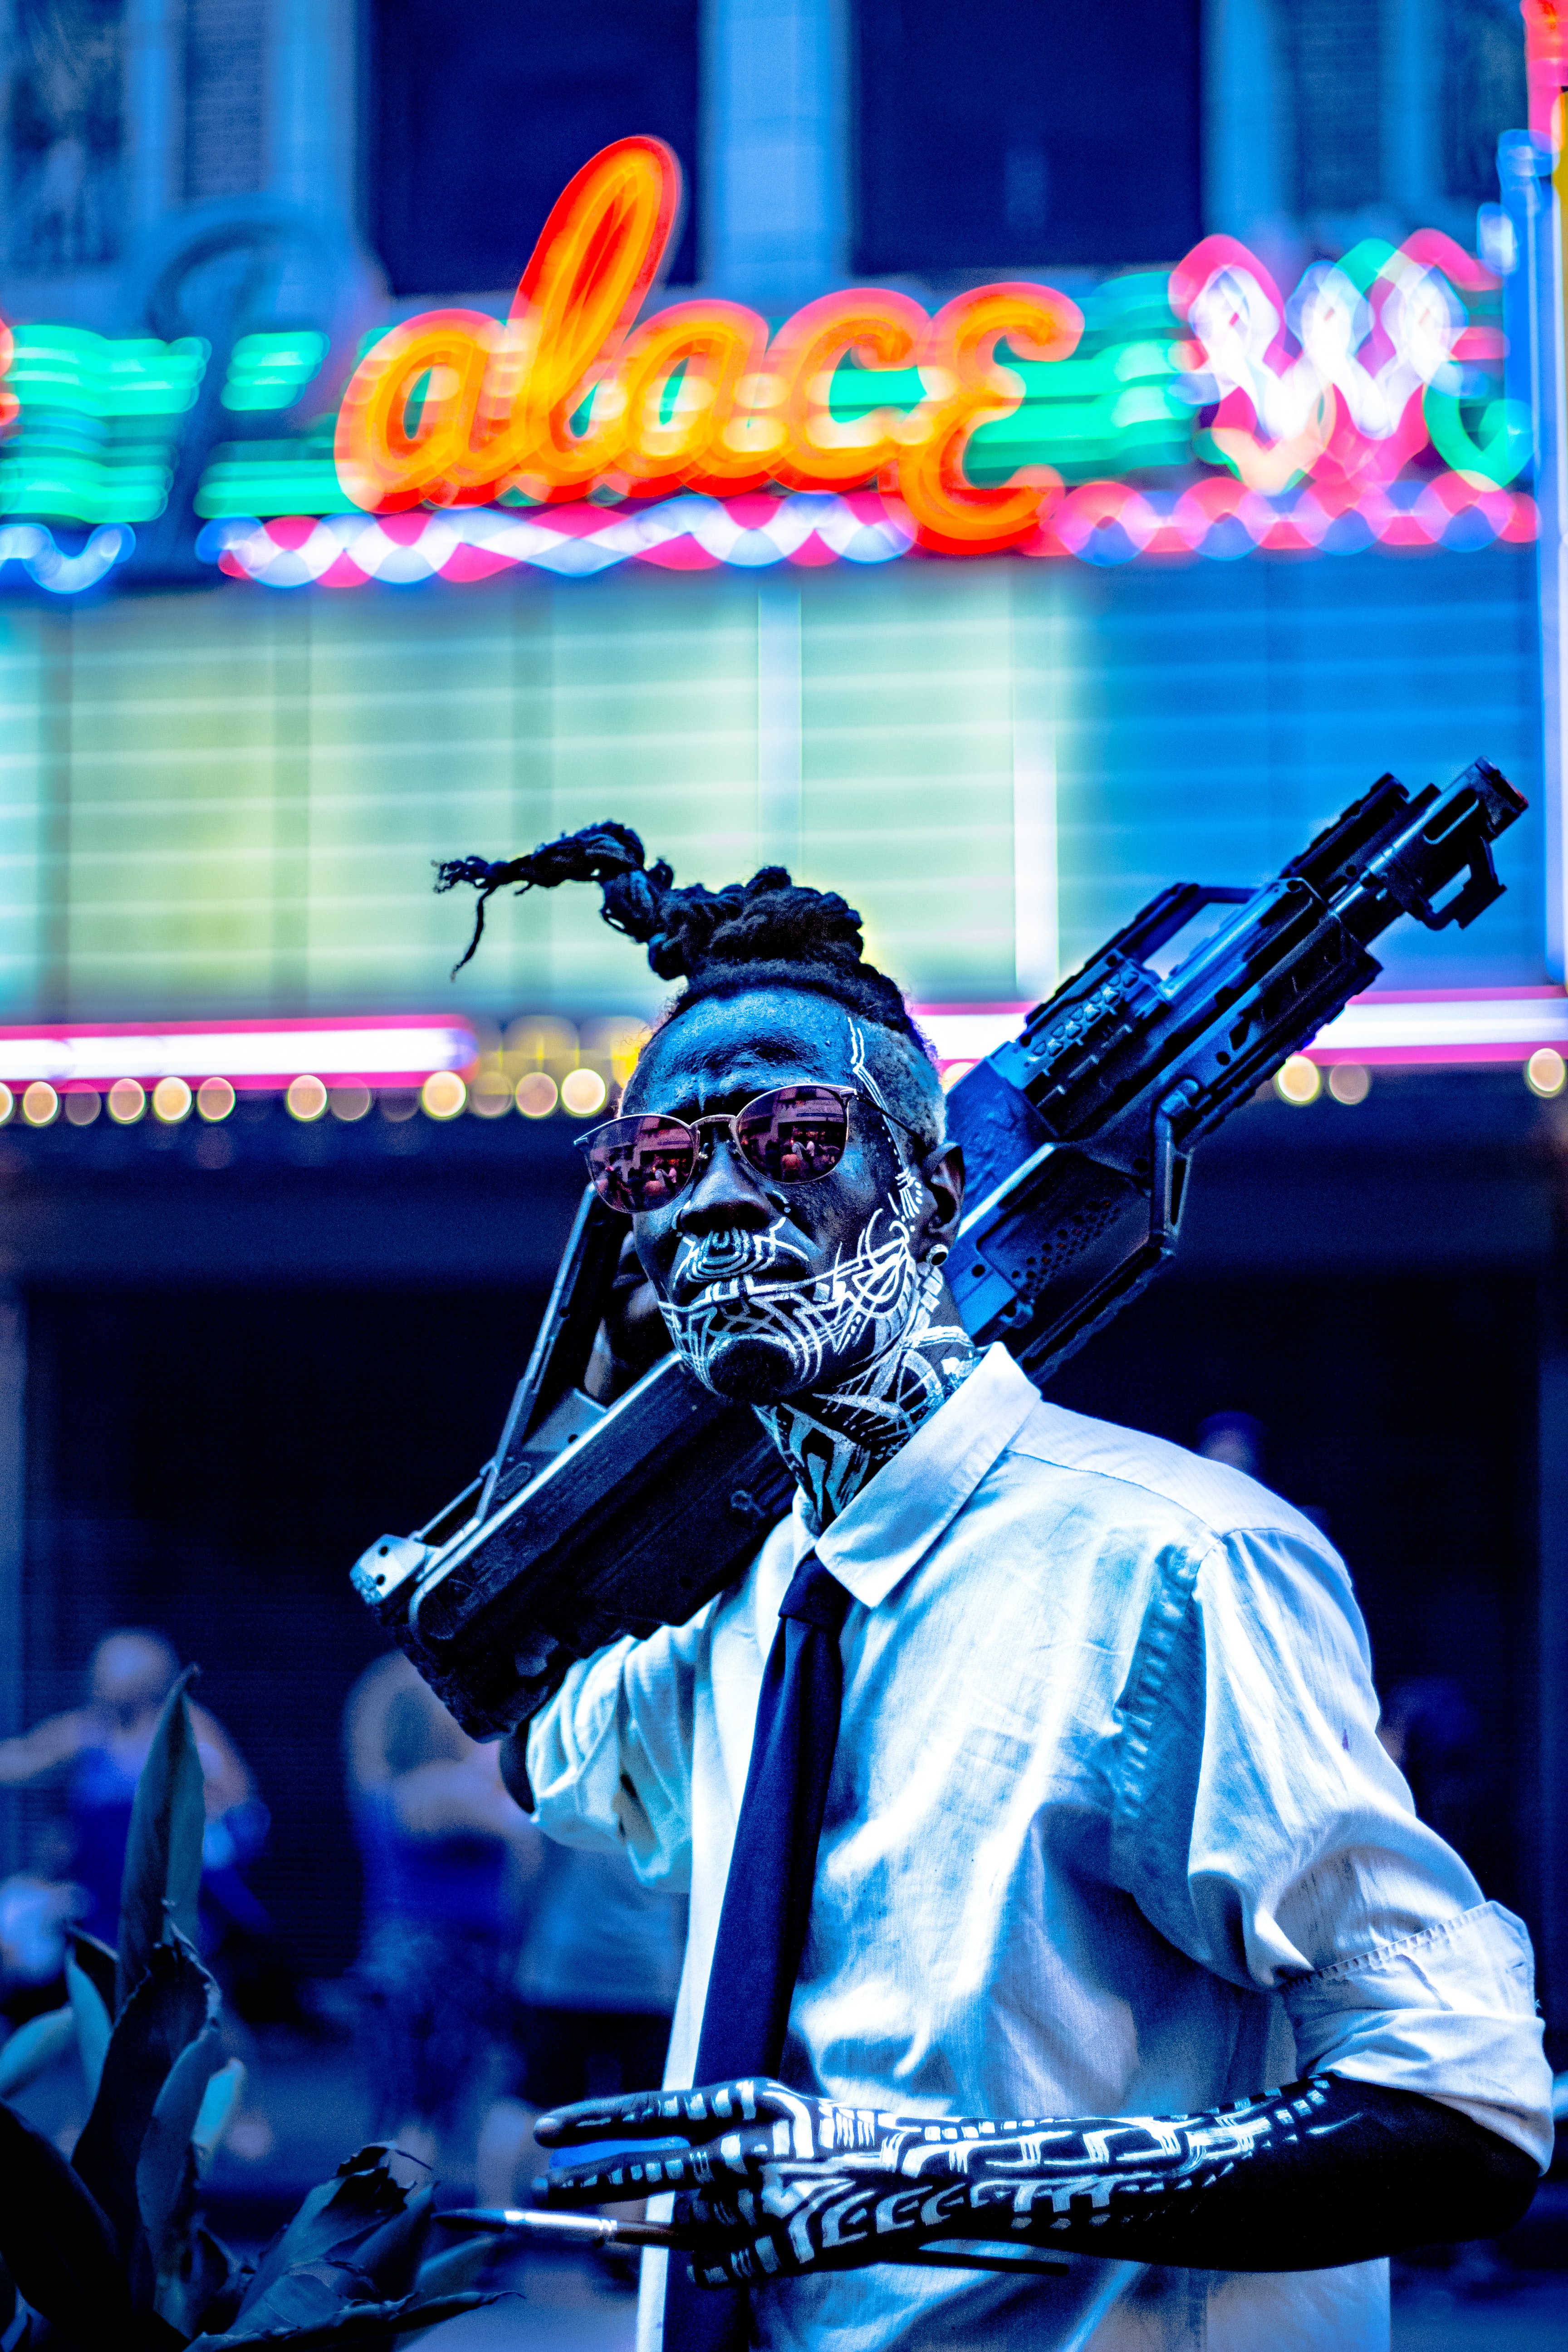 cyberpunk man, face paint neon white, holding gun, wearing sunglasses